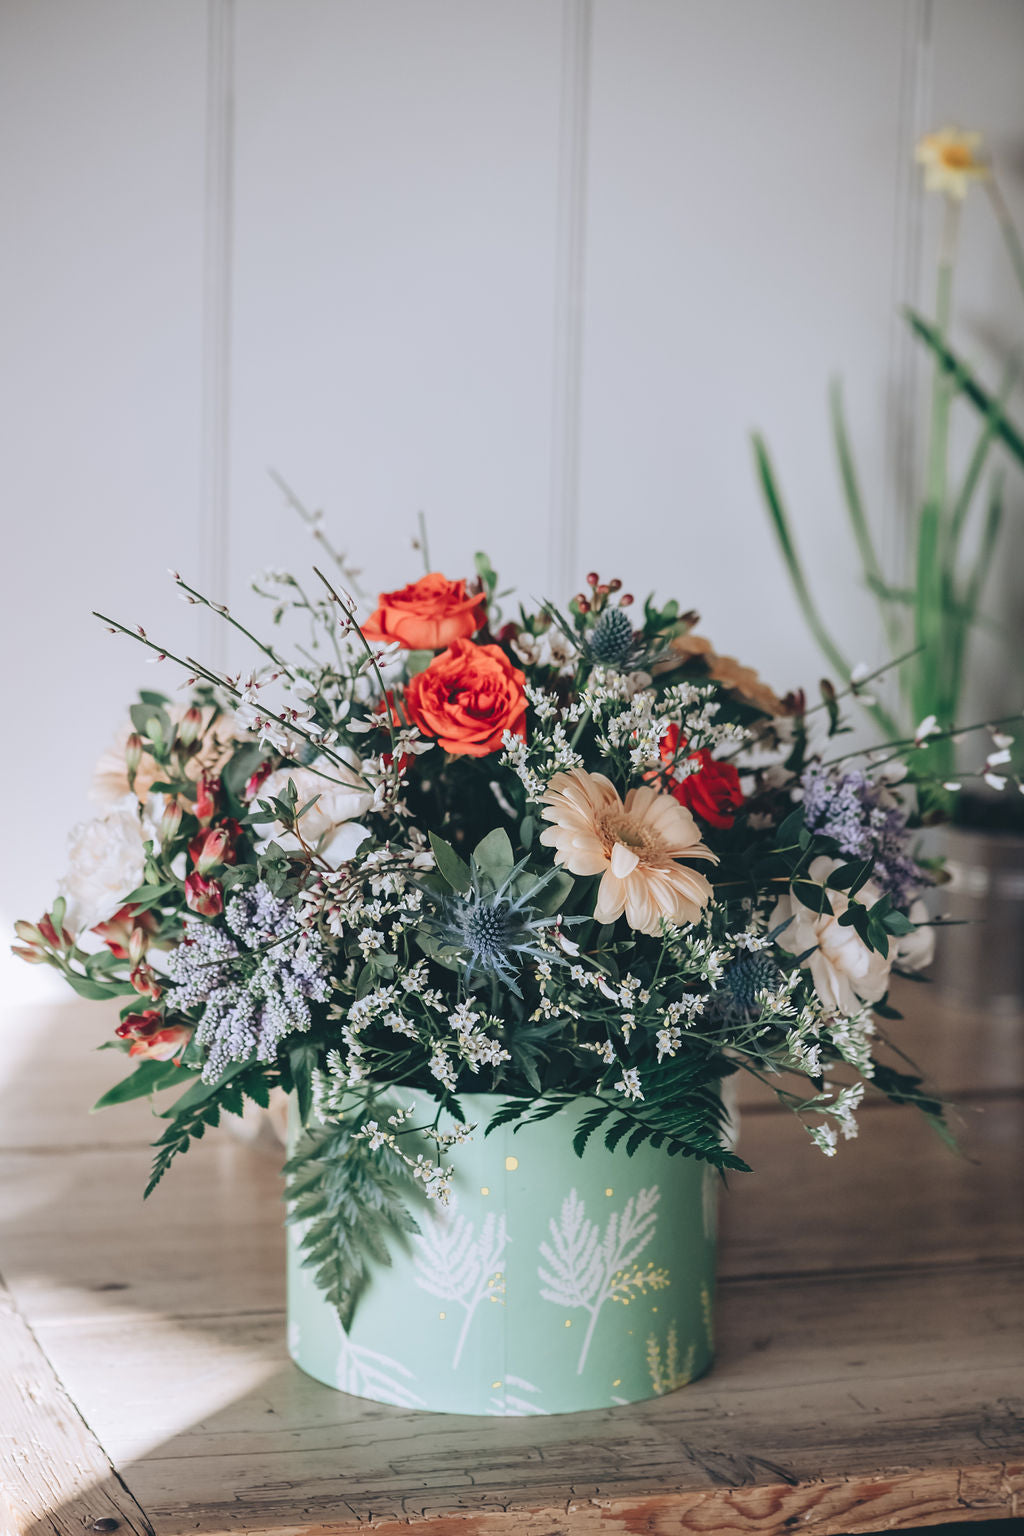 Hatbox of Seasonal flowers - Mothering Sunday